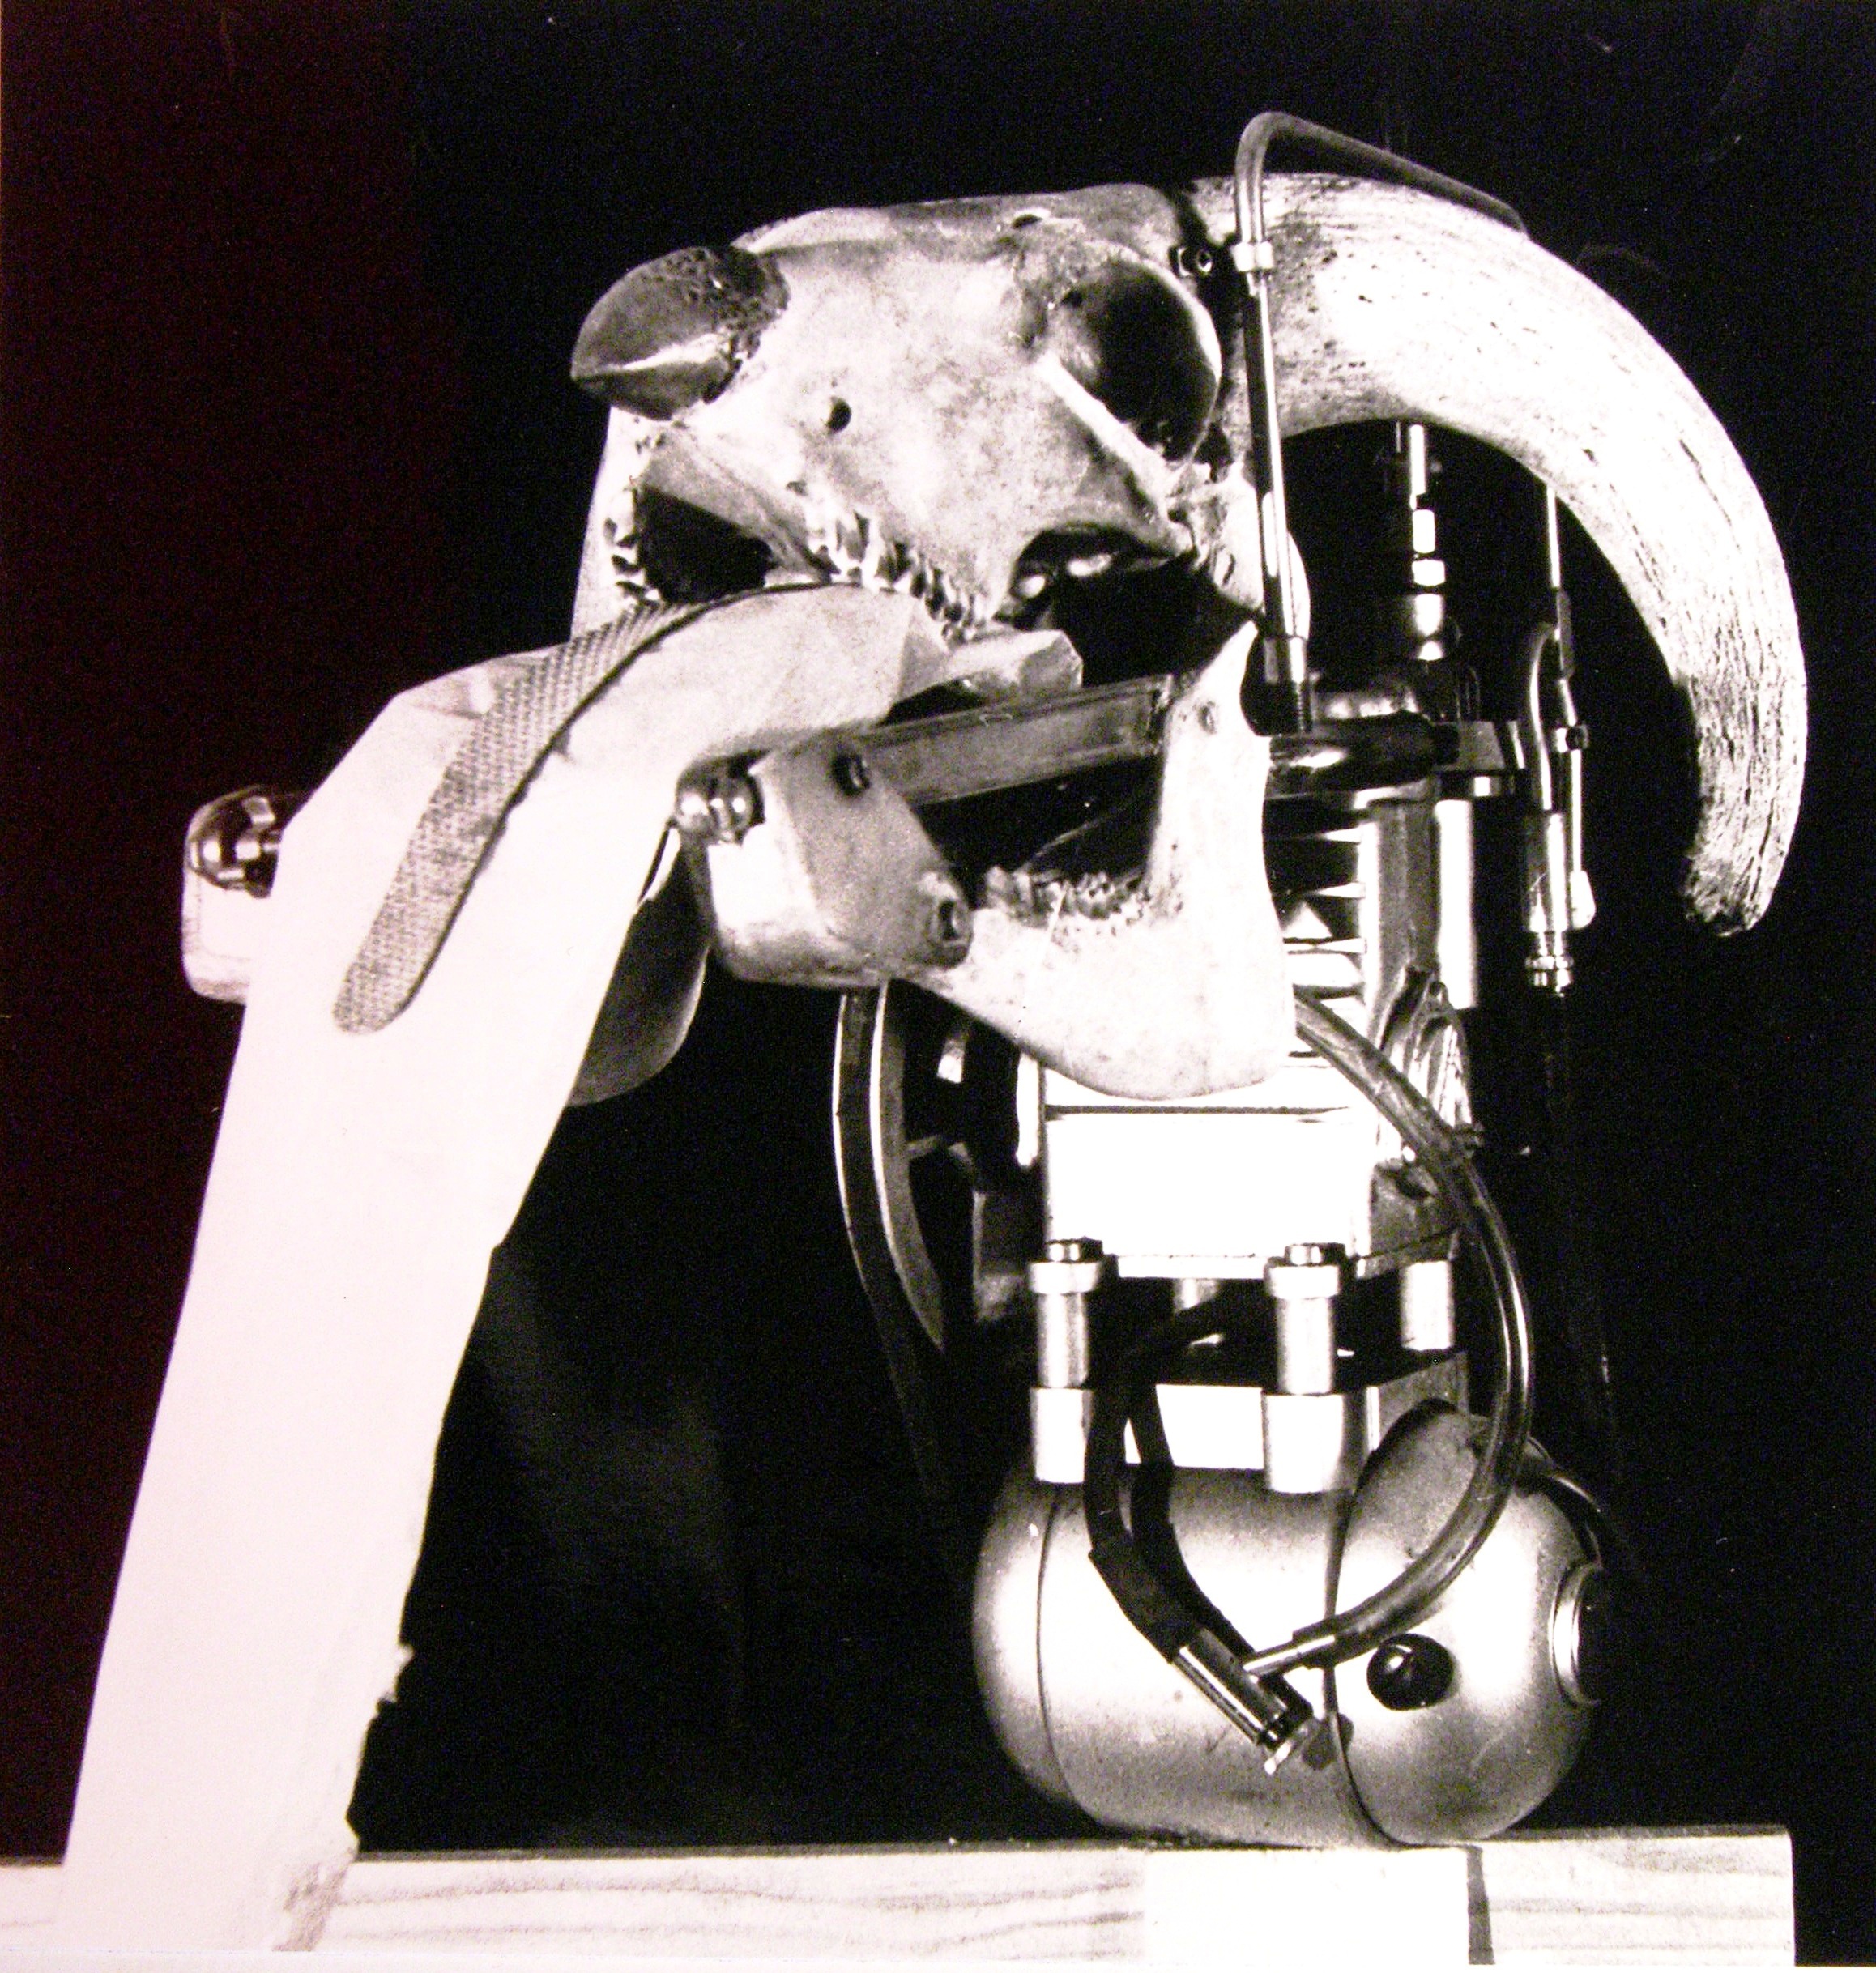 Hammelkompressor, 1983